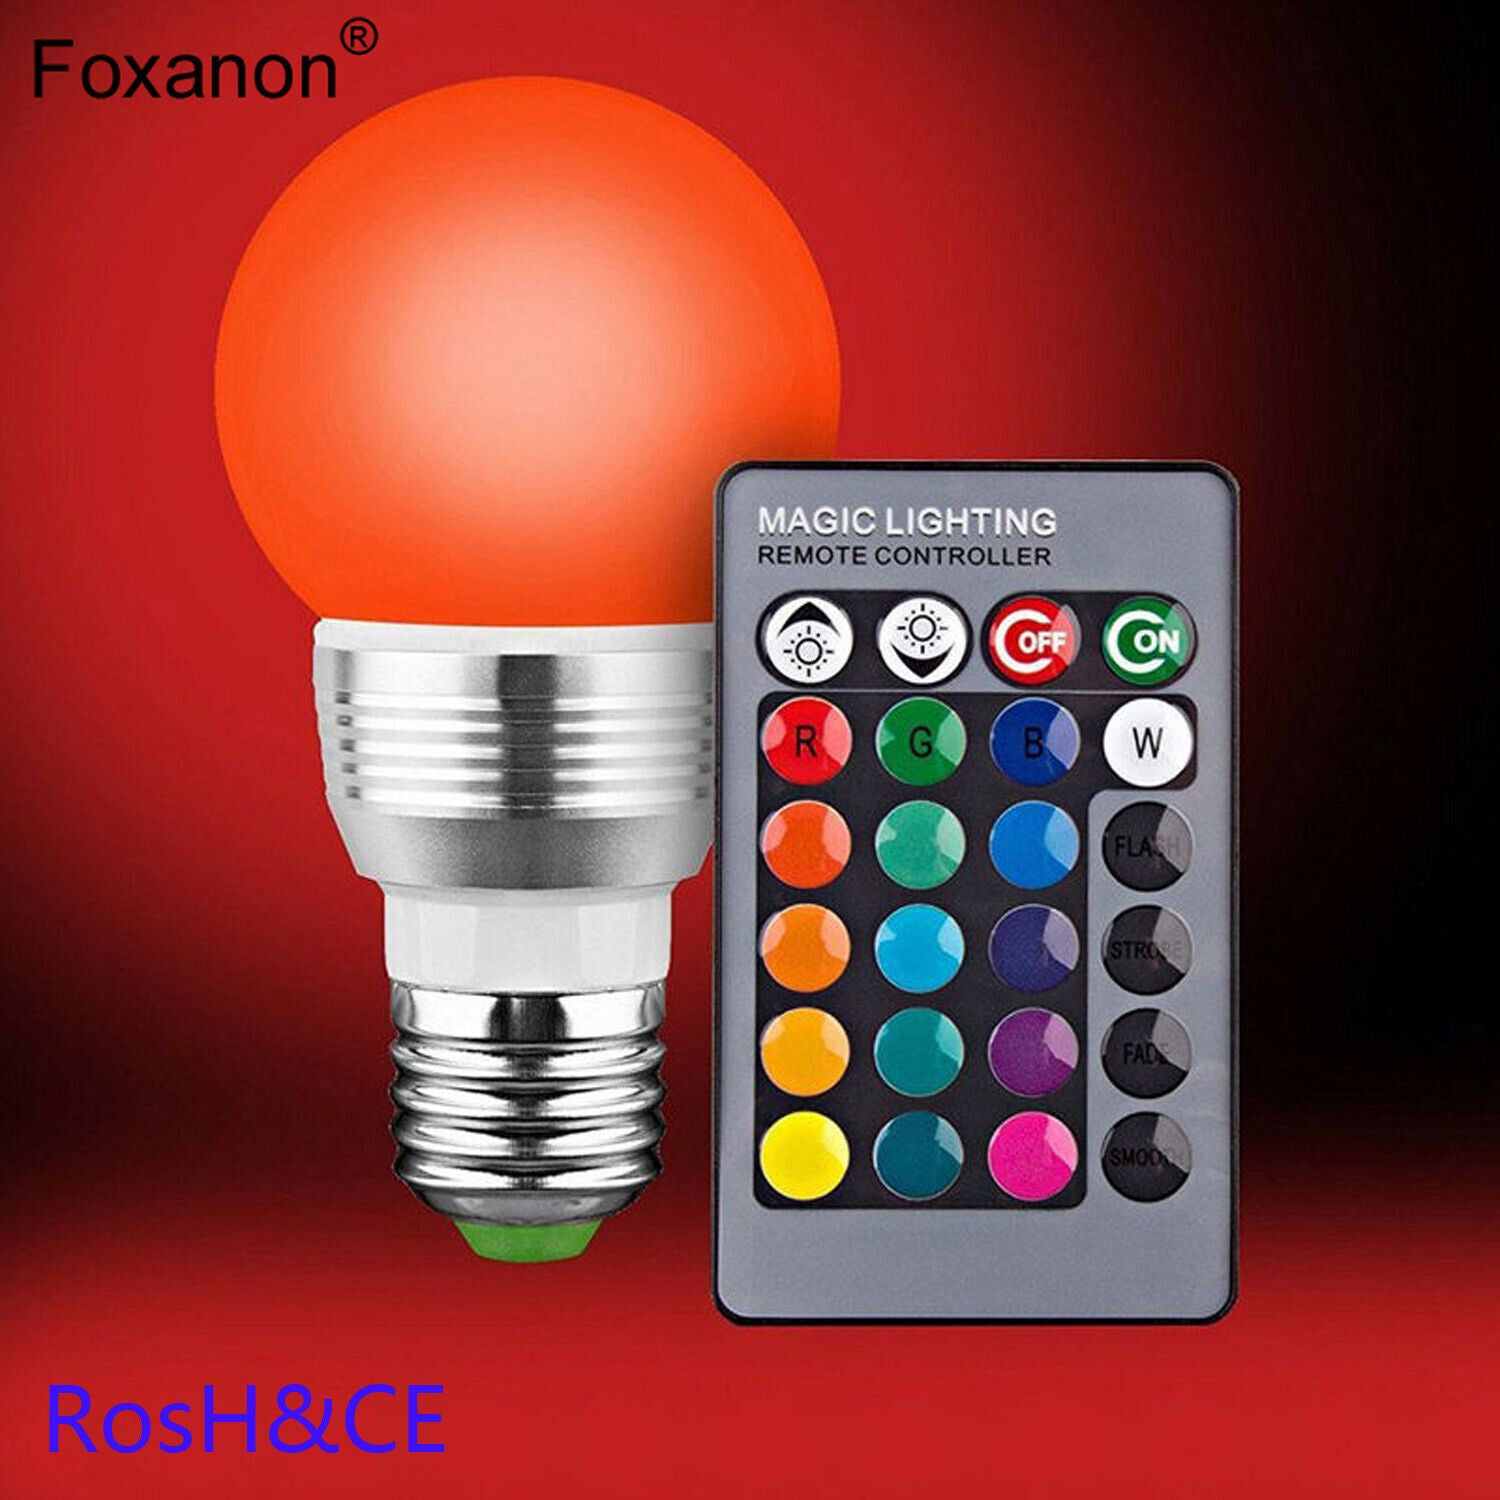 E27 RGB LED Light Bulb 5W Color Changing Energy Saving Lamp + Remote Control